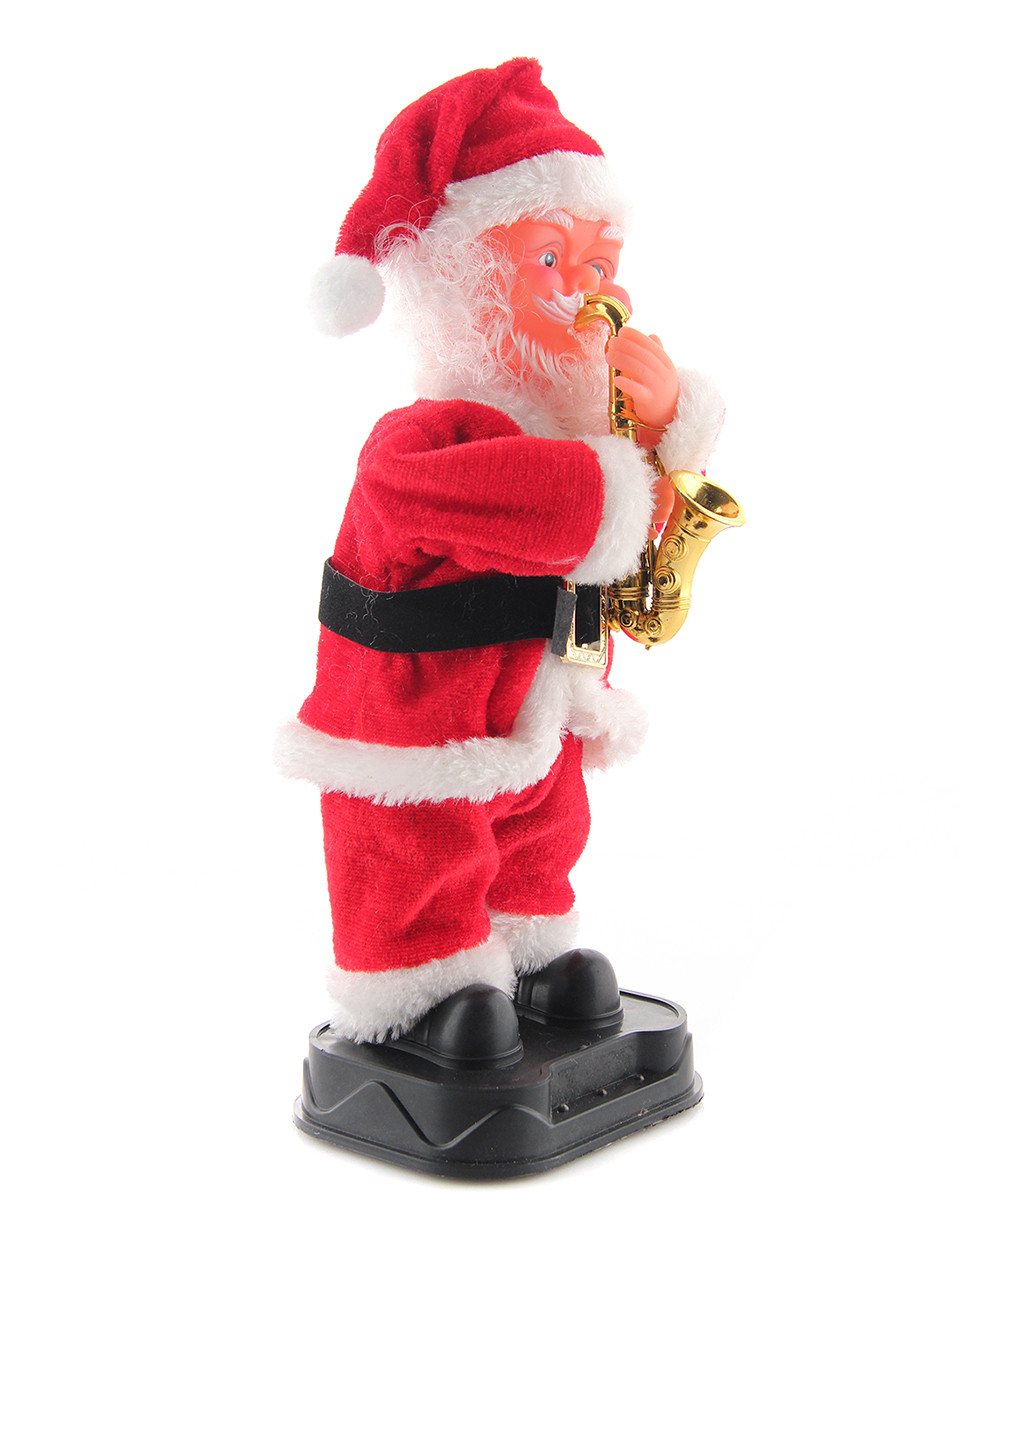 Музыкальная игрушка Санта Клаус UFT (56668226)